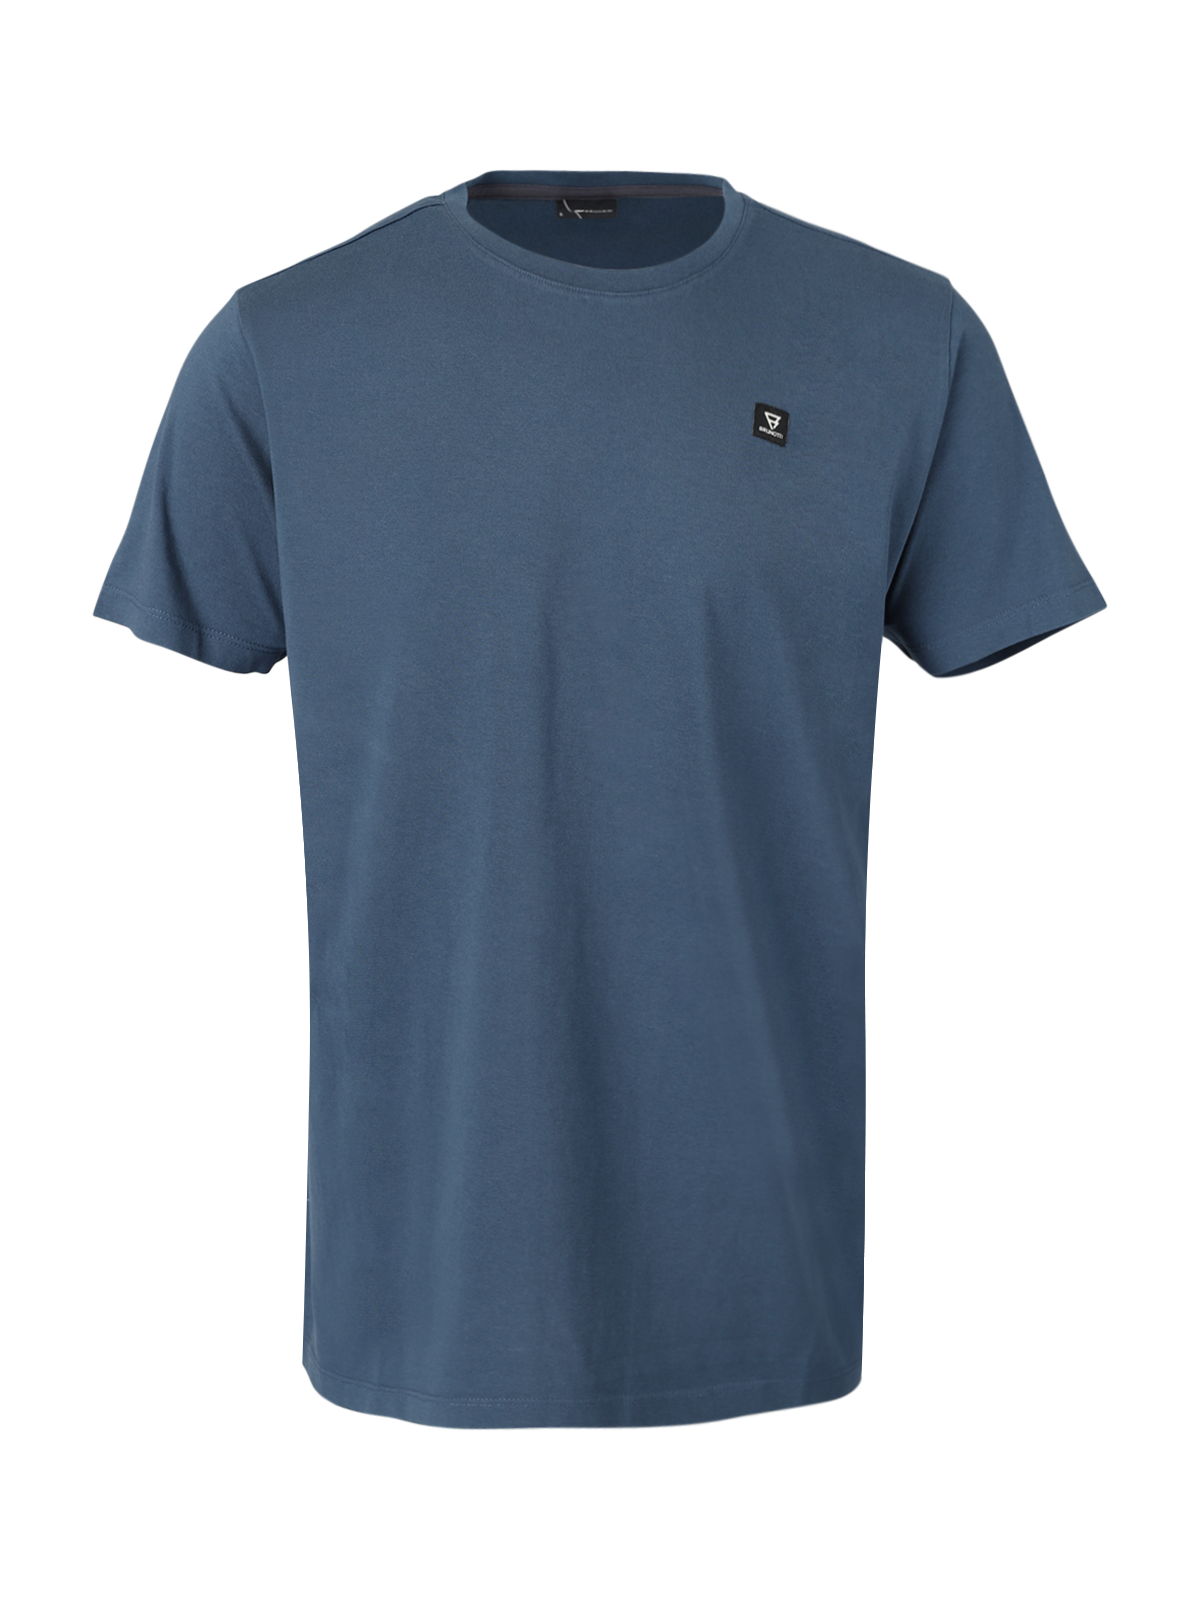 Axlon-R Men T-shirt | Blue